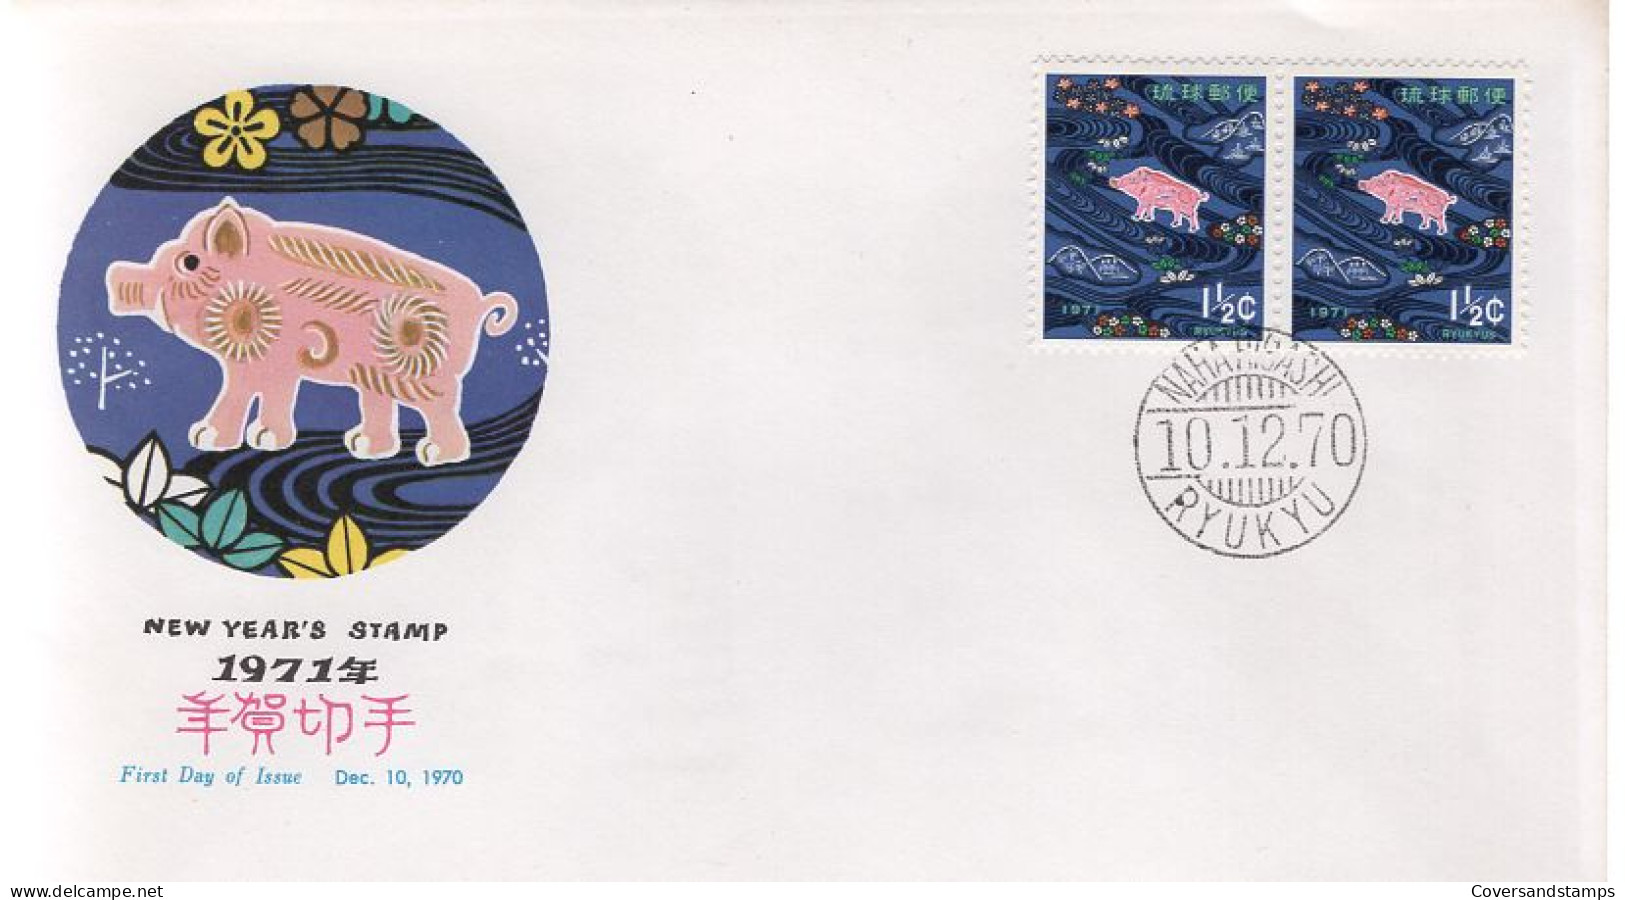  Riukiu - FDC - New Year's Stamp 1971 - Ryukyu Islands